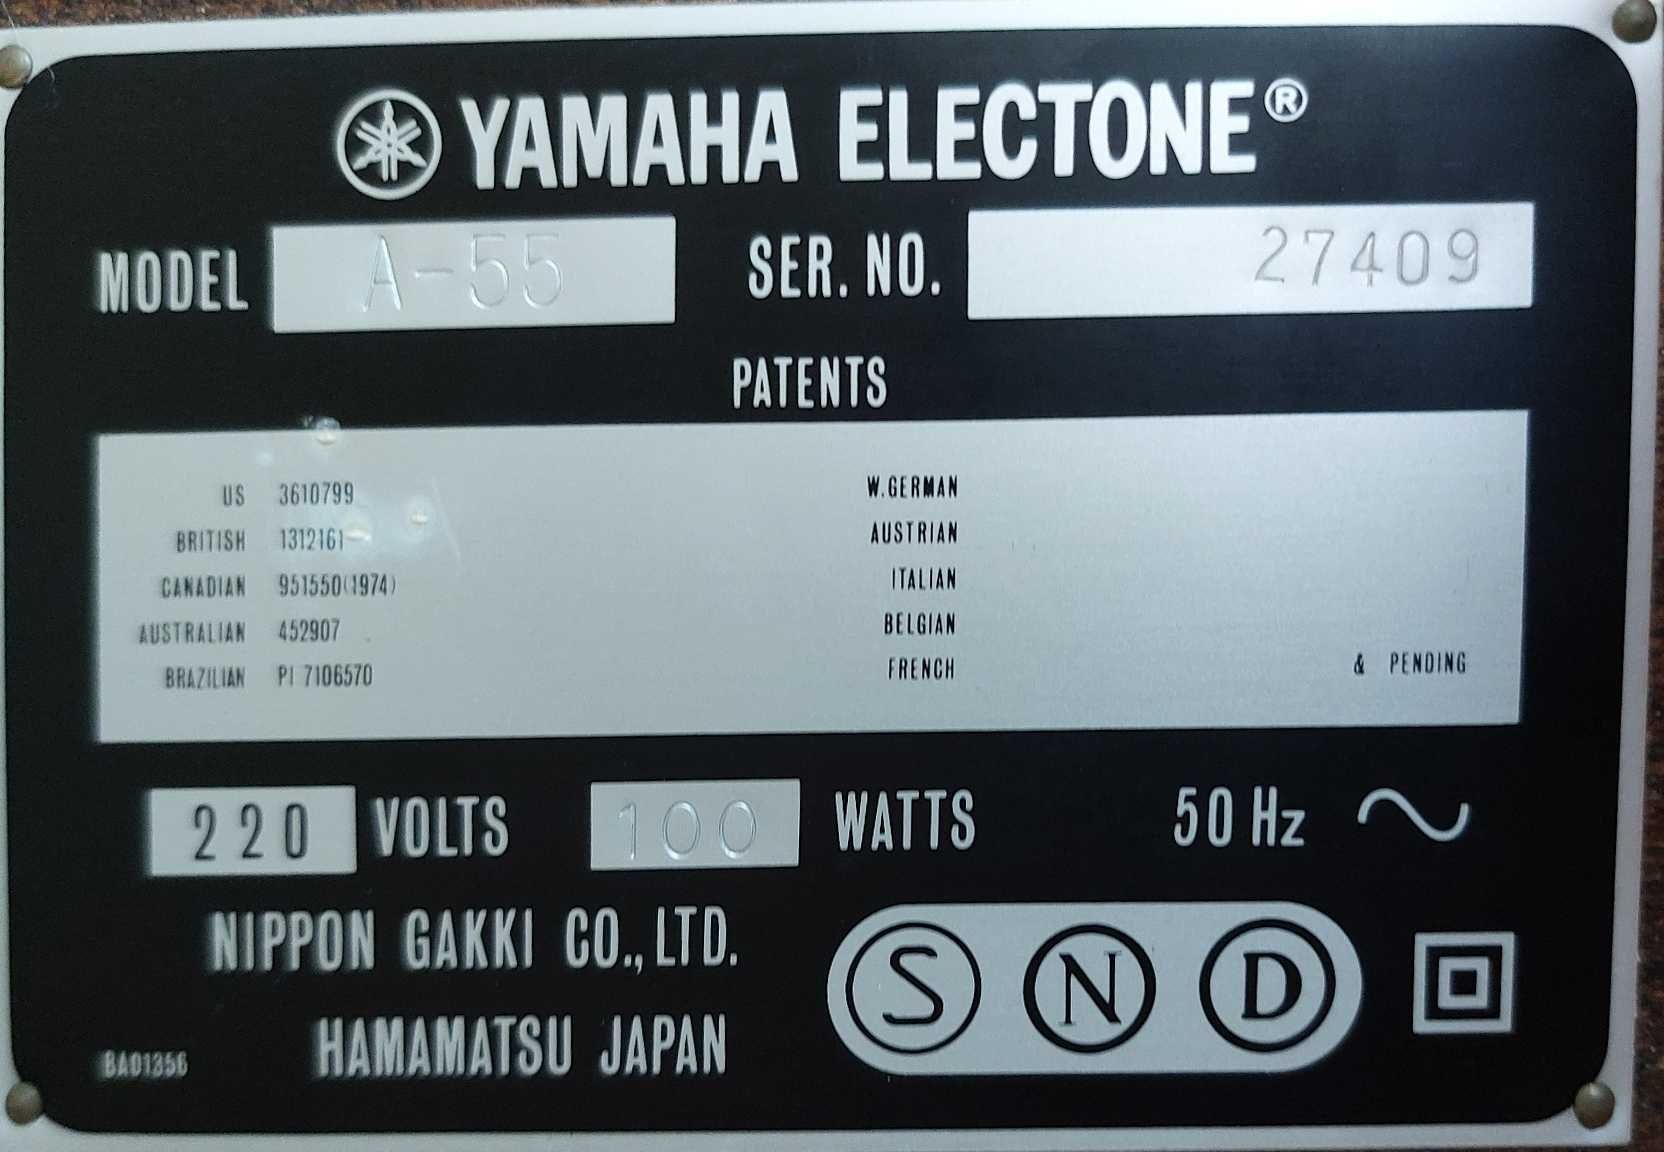 Yamaha A-55 Elecotone